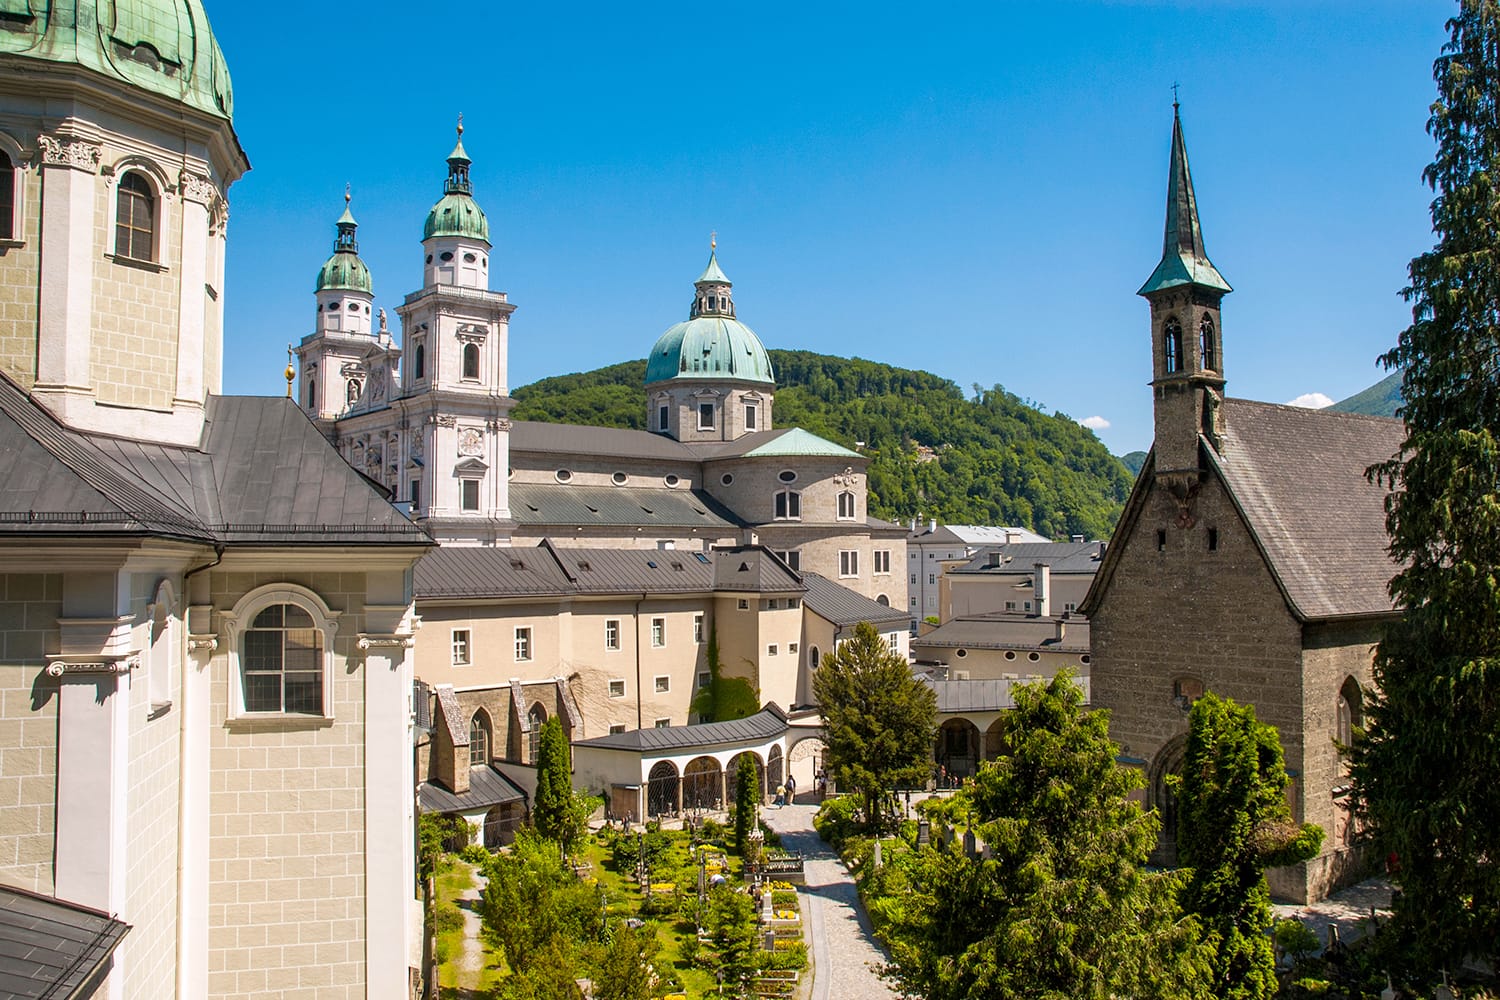 View to Salzburg Cathedral, dedicated to Saint Rupert and Saint Vergilius. Salzburg, Austria